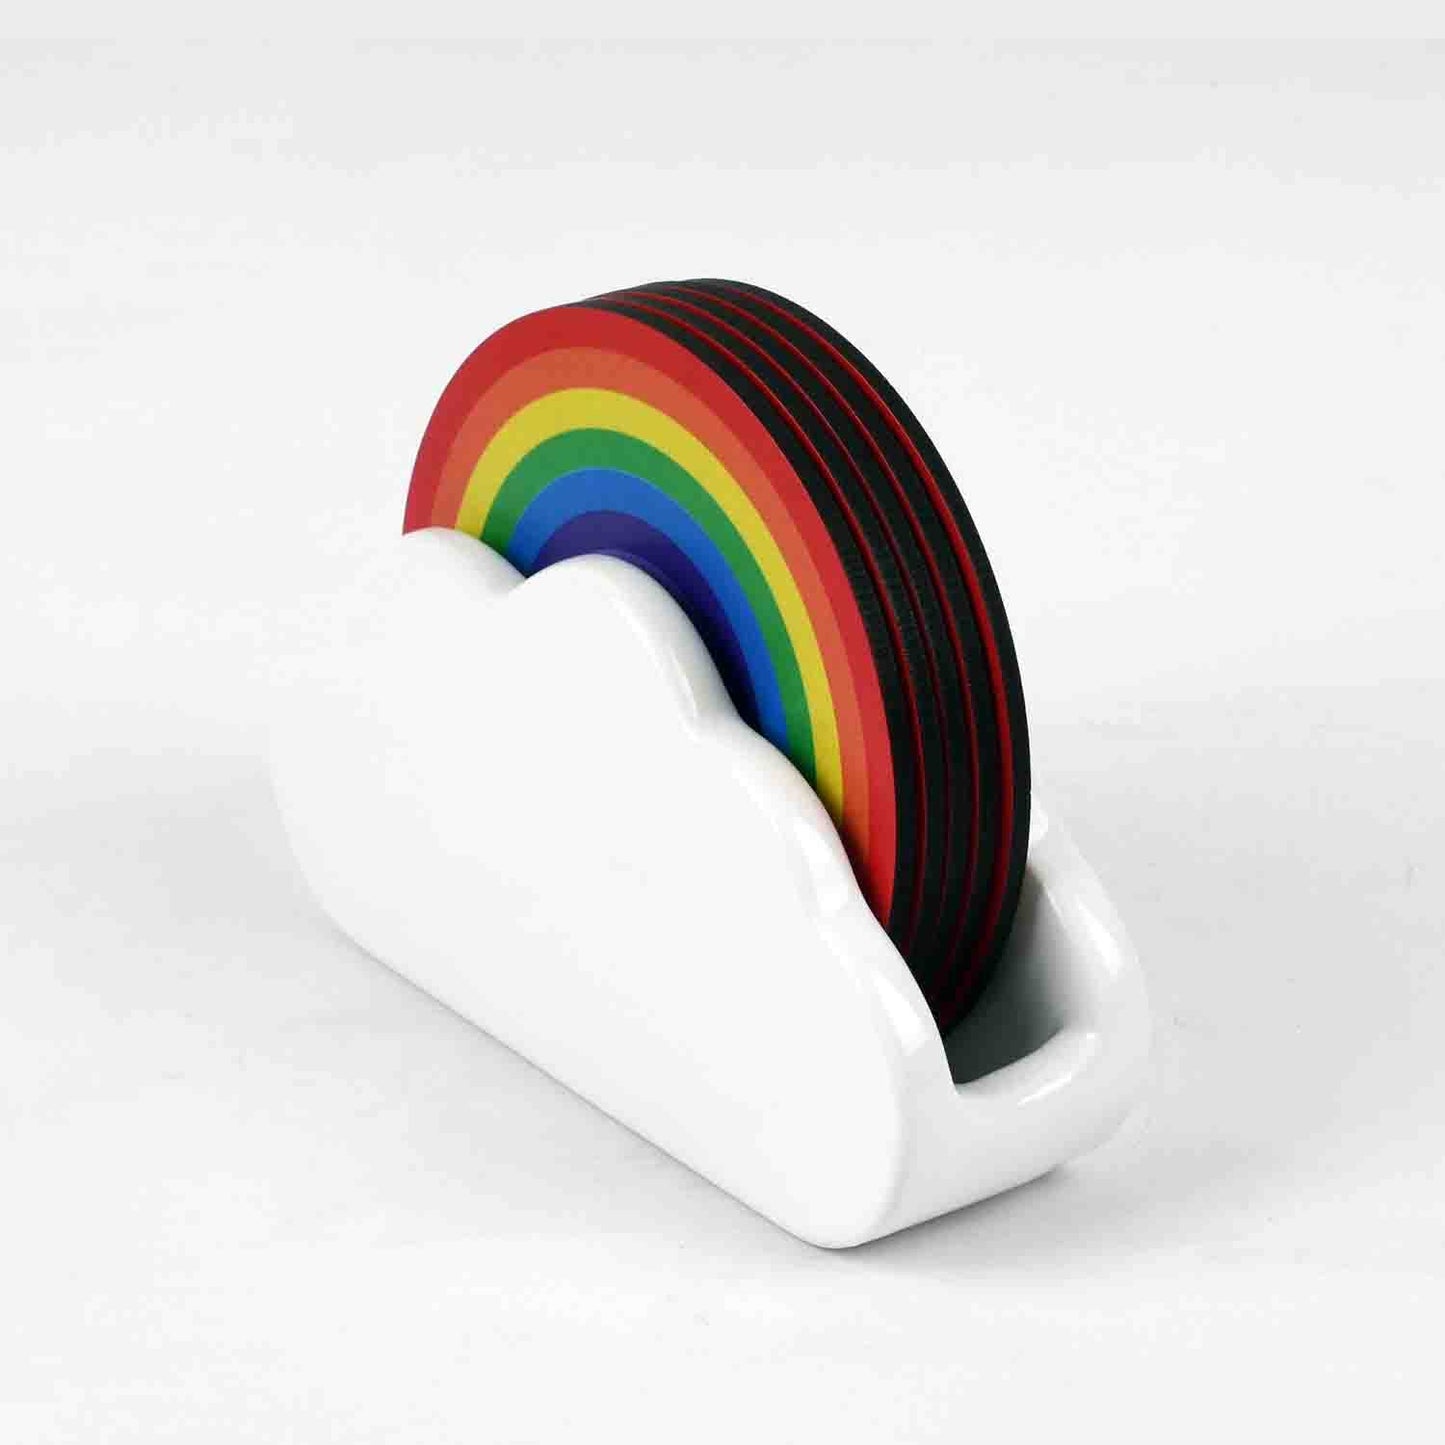 Rainbow Coasters | Wooden Coasters in Ceramic Cloud Holder